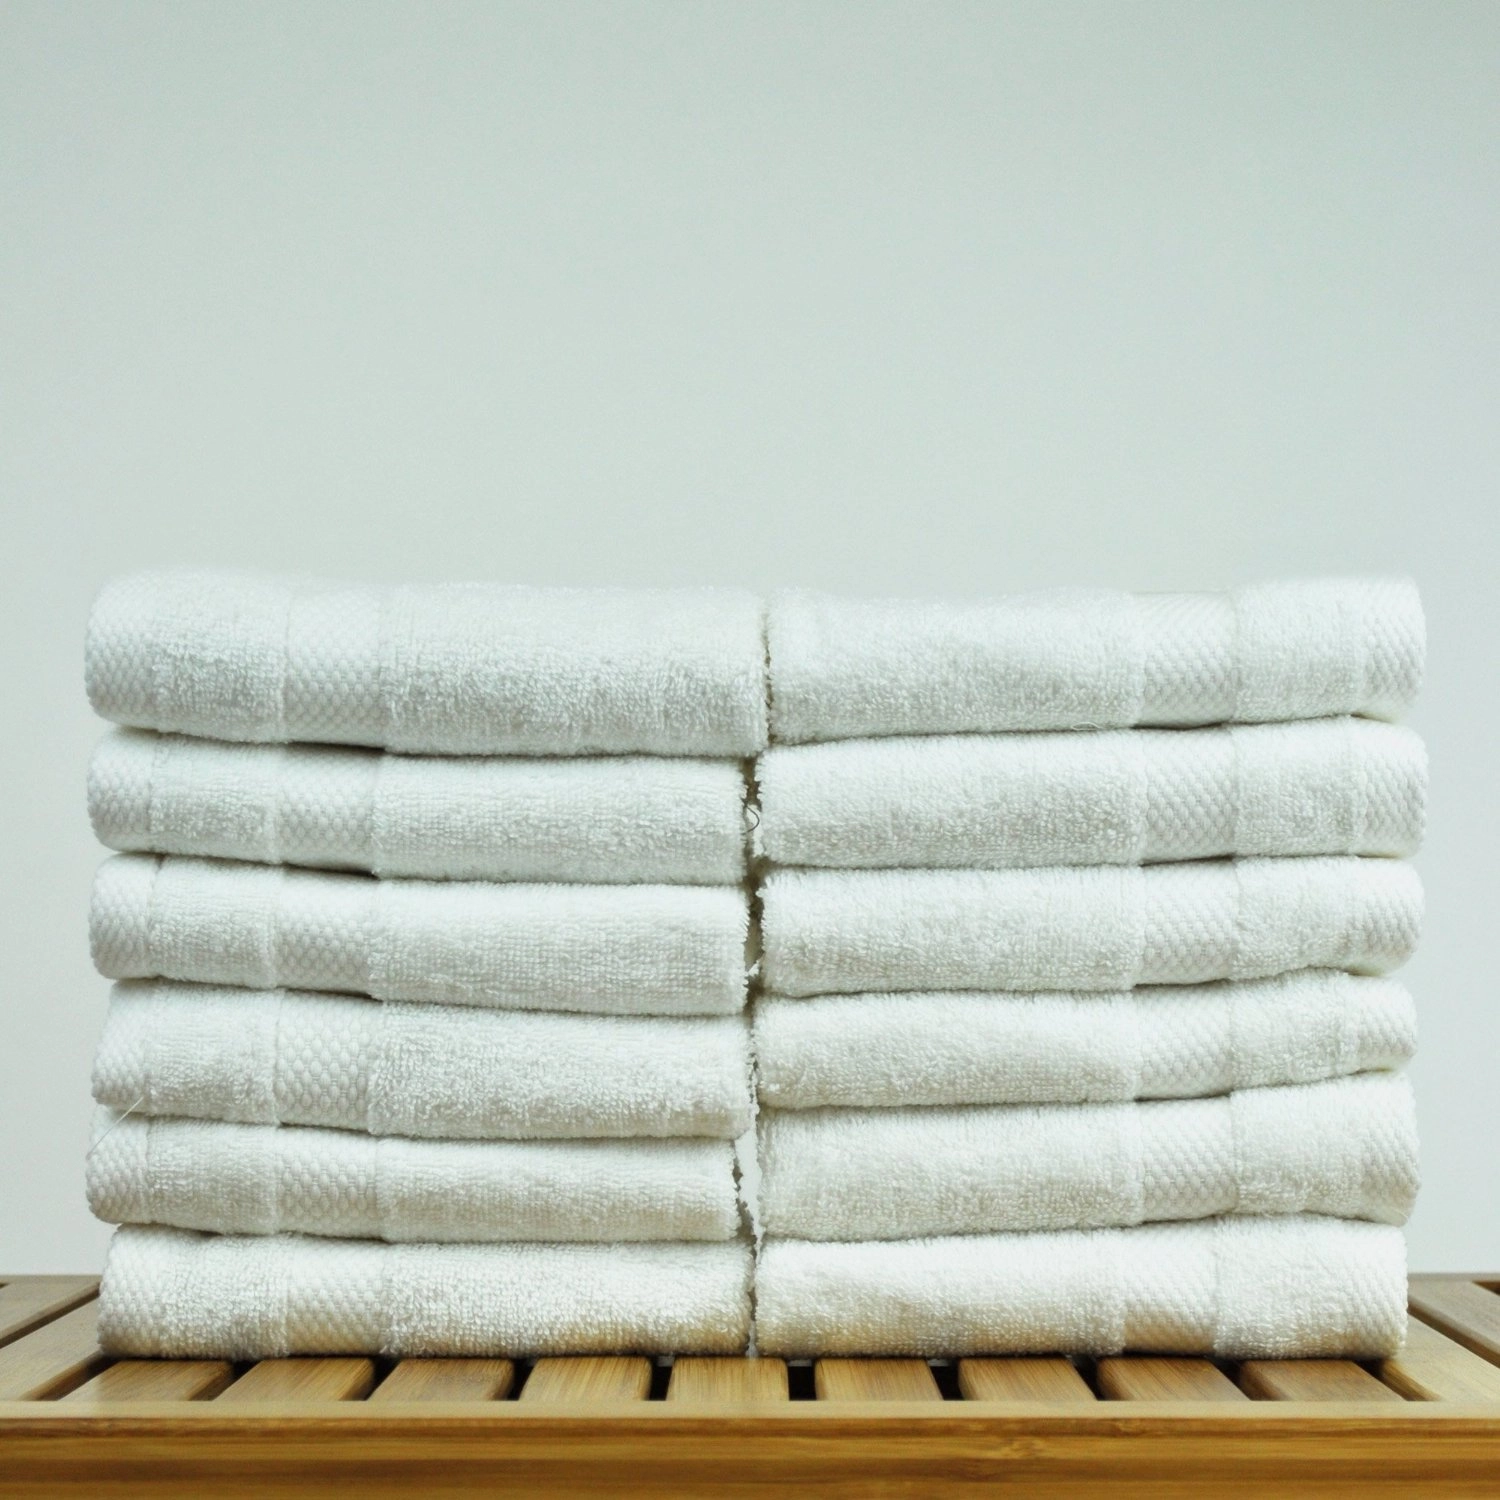 Chakir Turkish Linens 100% Turkish Cotton Luxury Hotel & Spa Washcloth Set  (Set of 12, Gray)